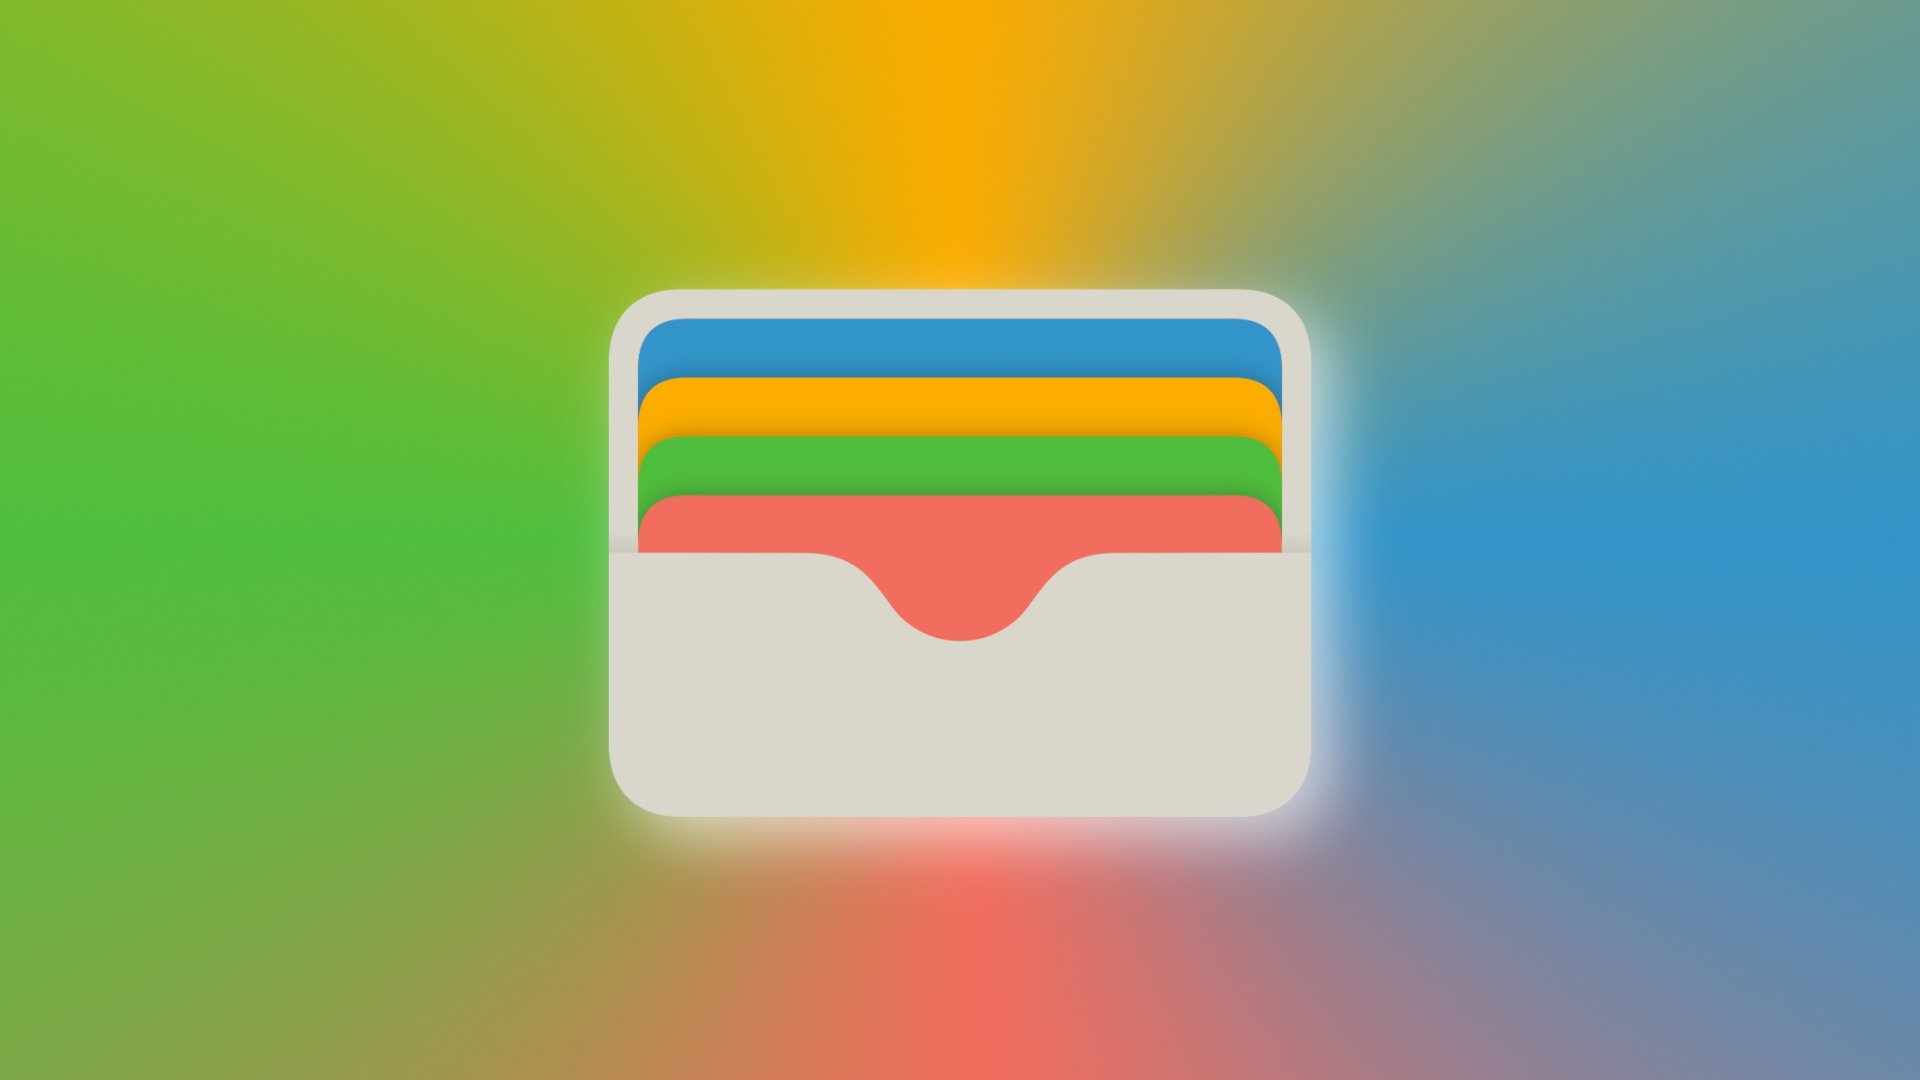 The Apple Wallet app icon set against a color gradient background